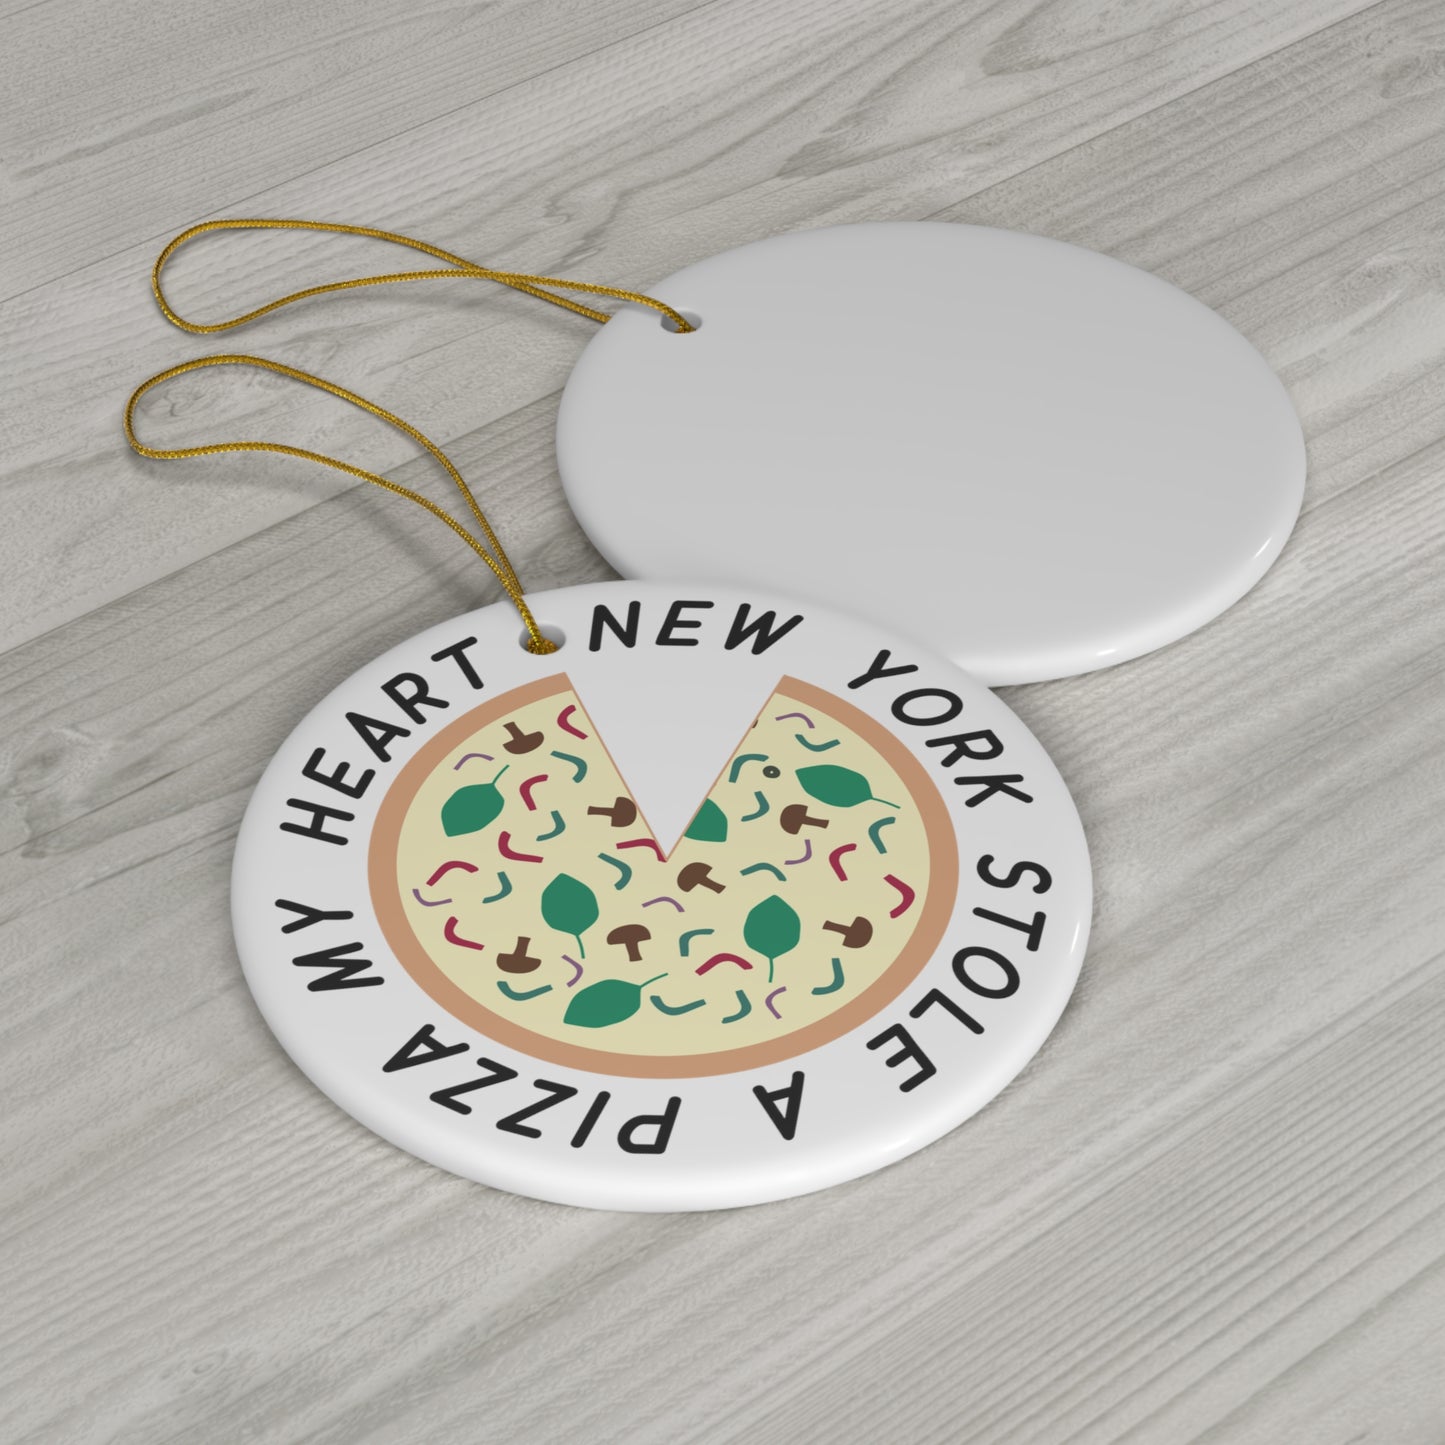 New York Stole a Pizza my Heart Christmas Ornament / Veggie Pizza